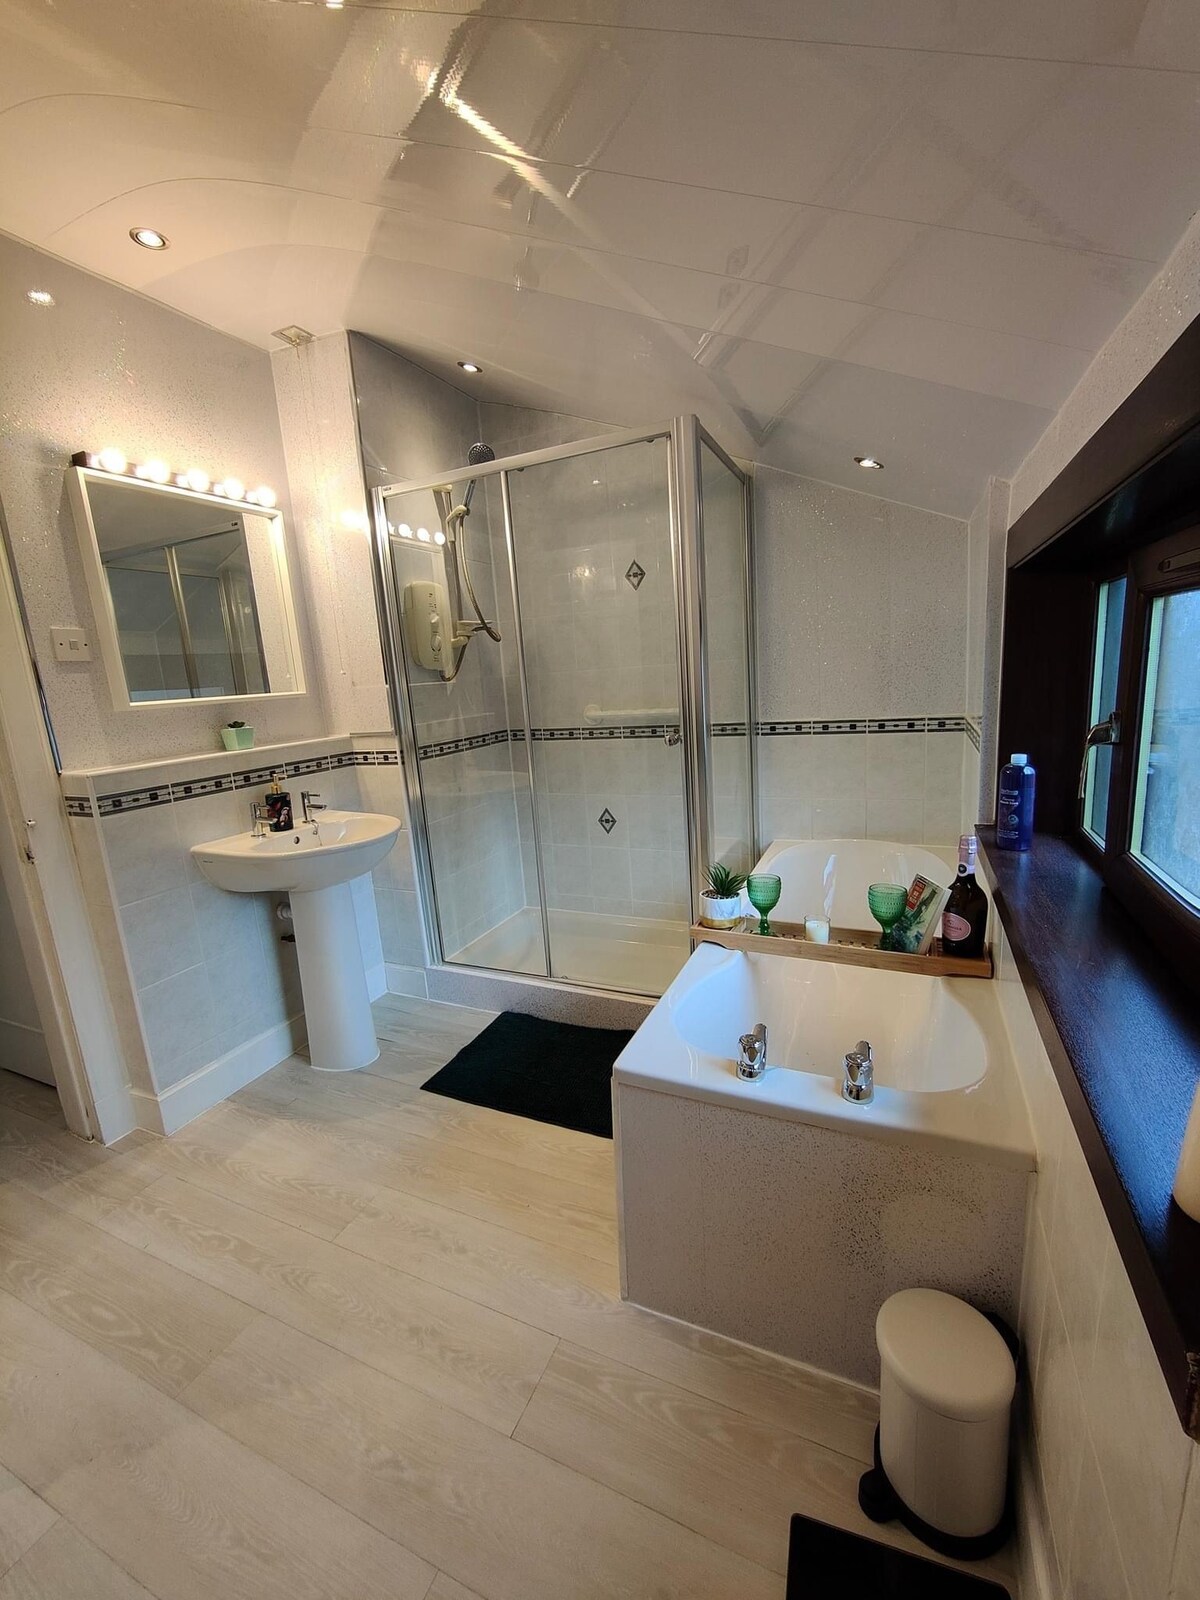 Elegant 4 bedroom sea-side home with hot tub.